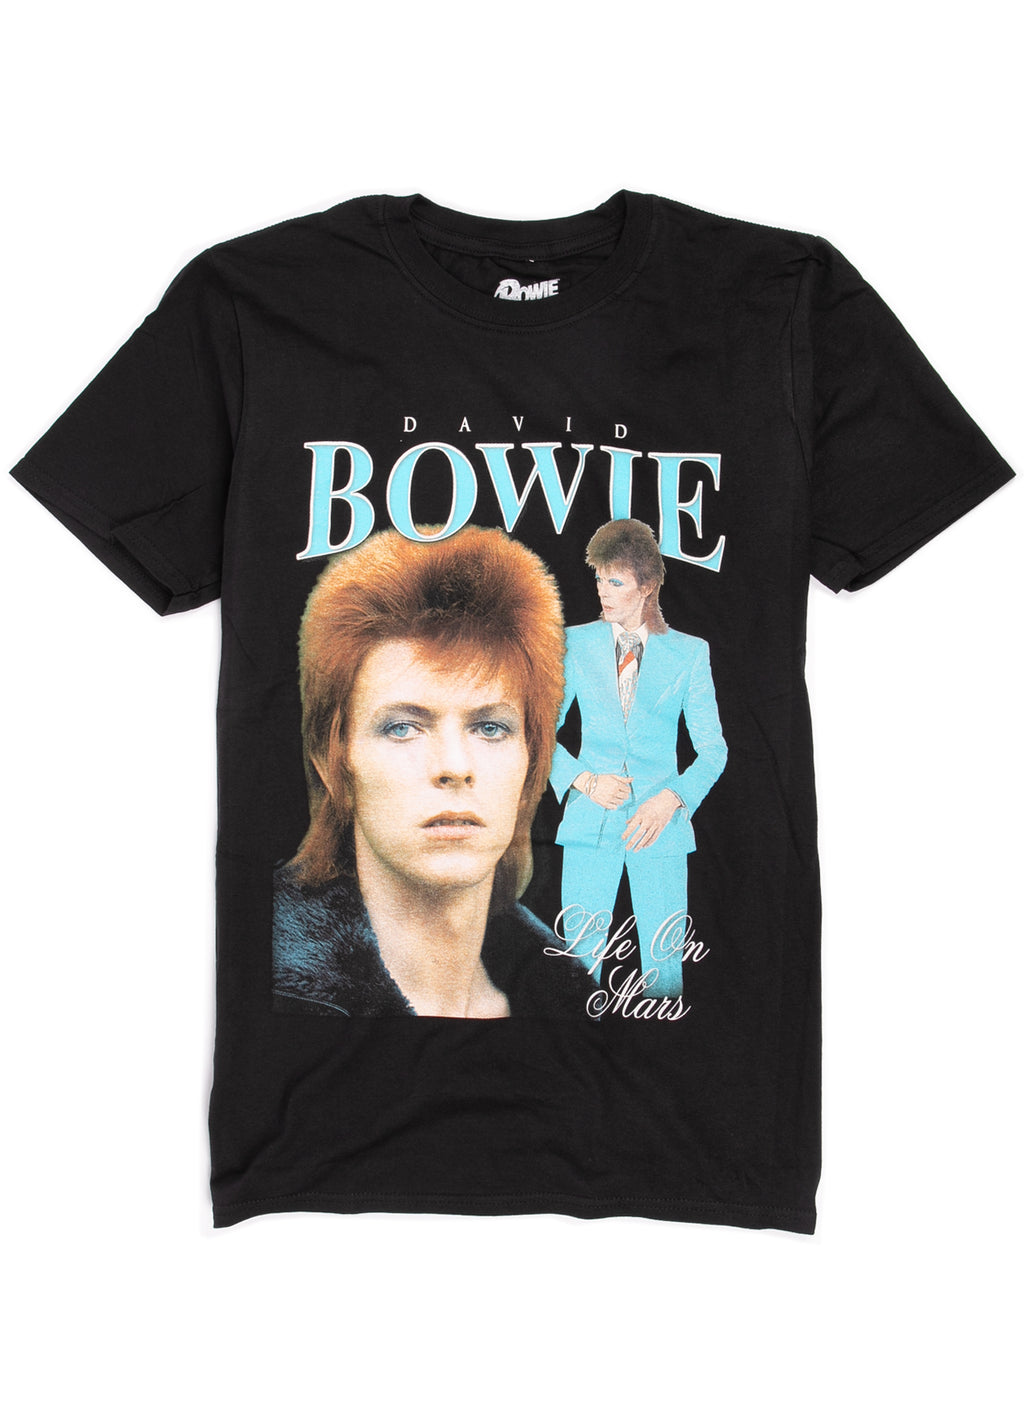 David Bowie Life On Mars t-shirt.